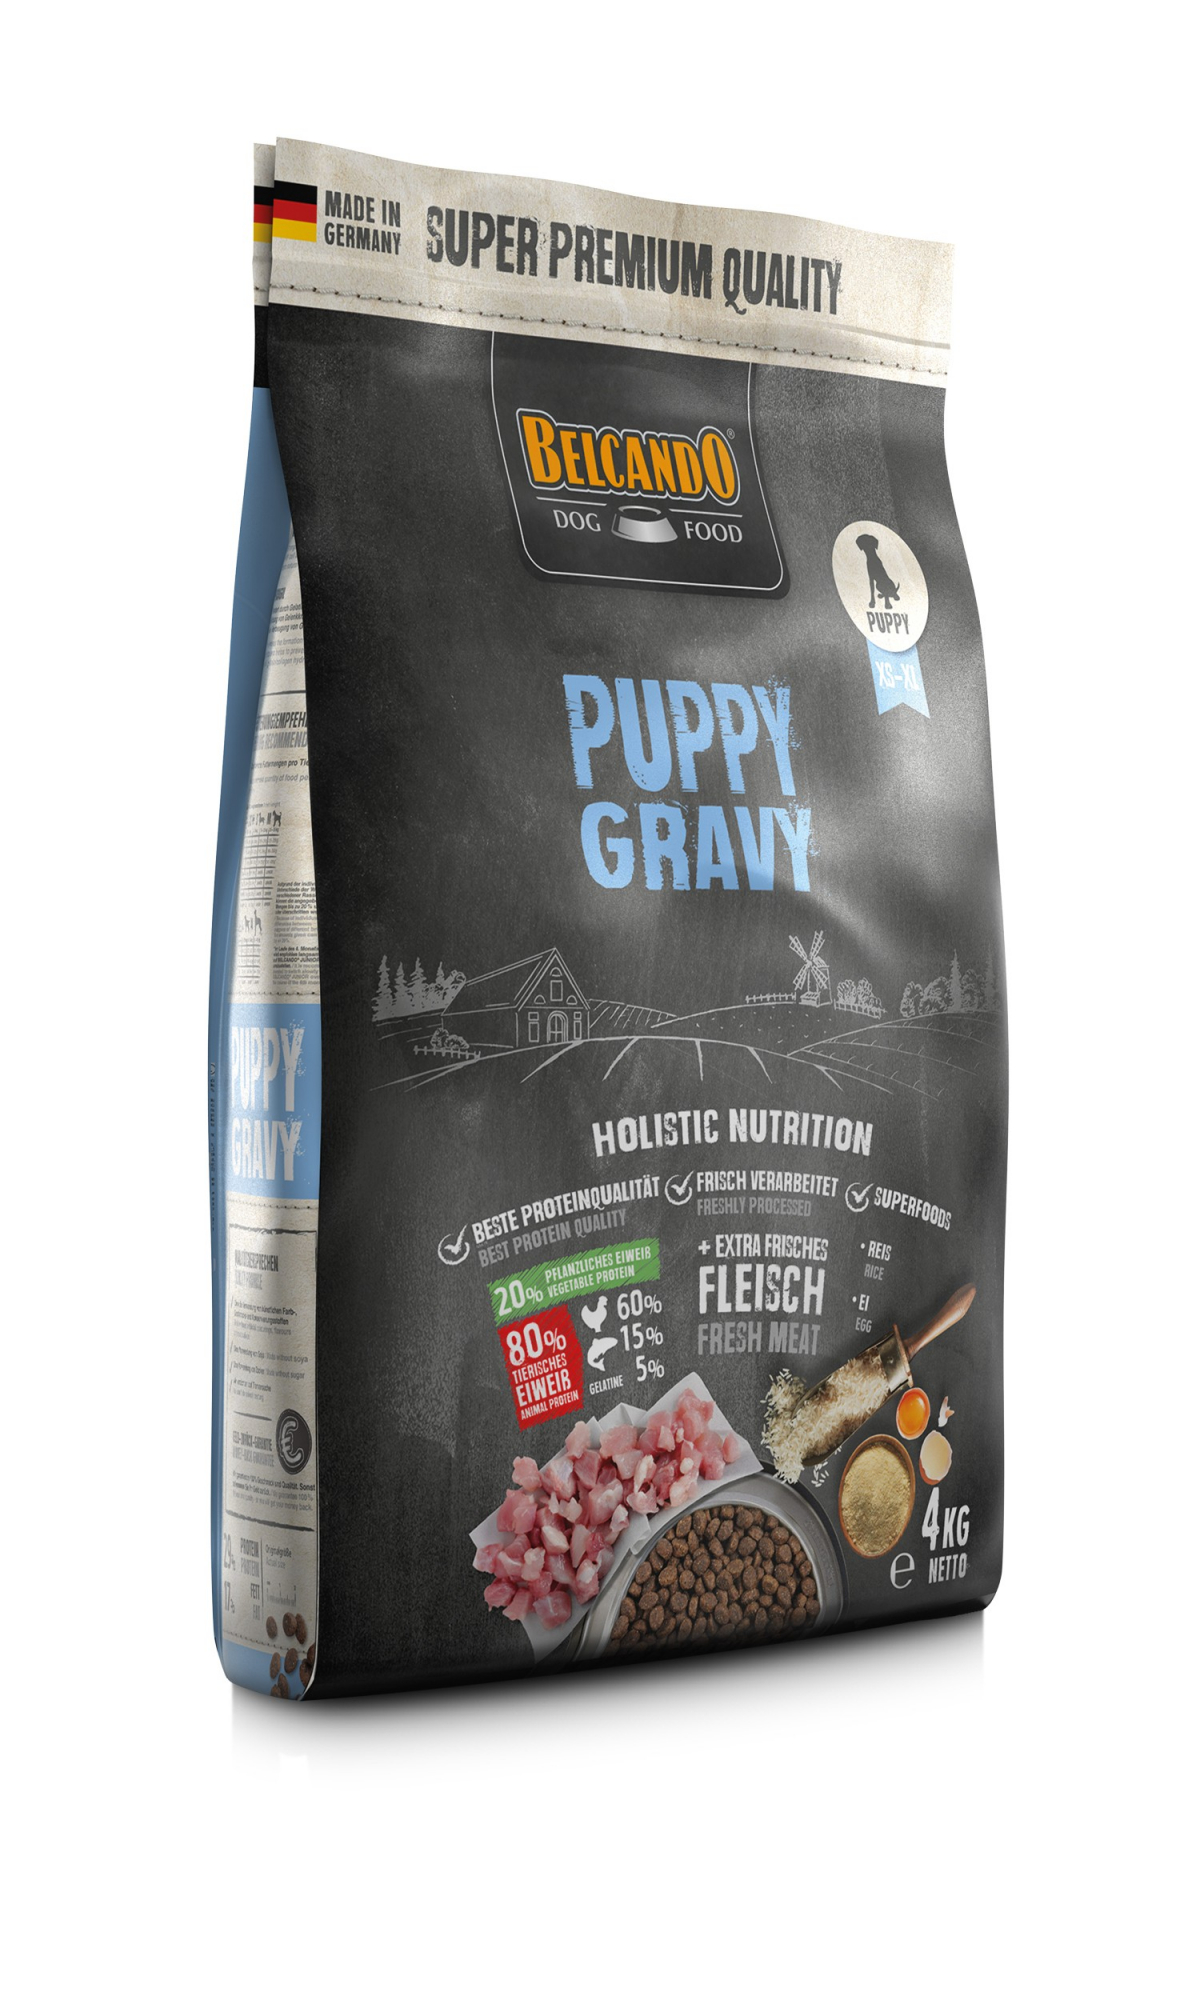 Belcando Puppy Gravy per cucciolo di cane